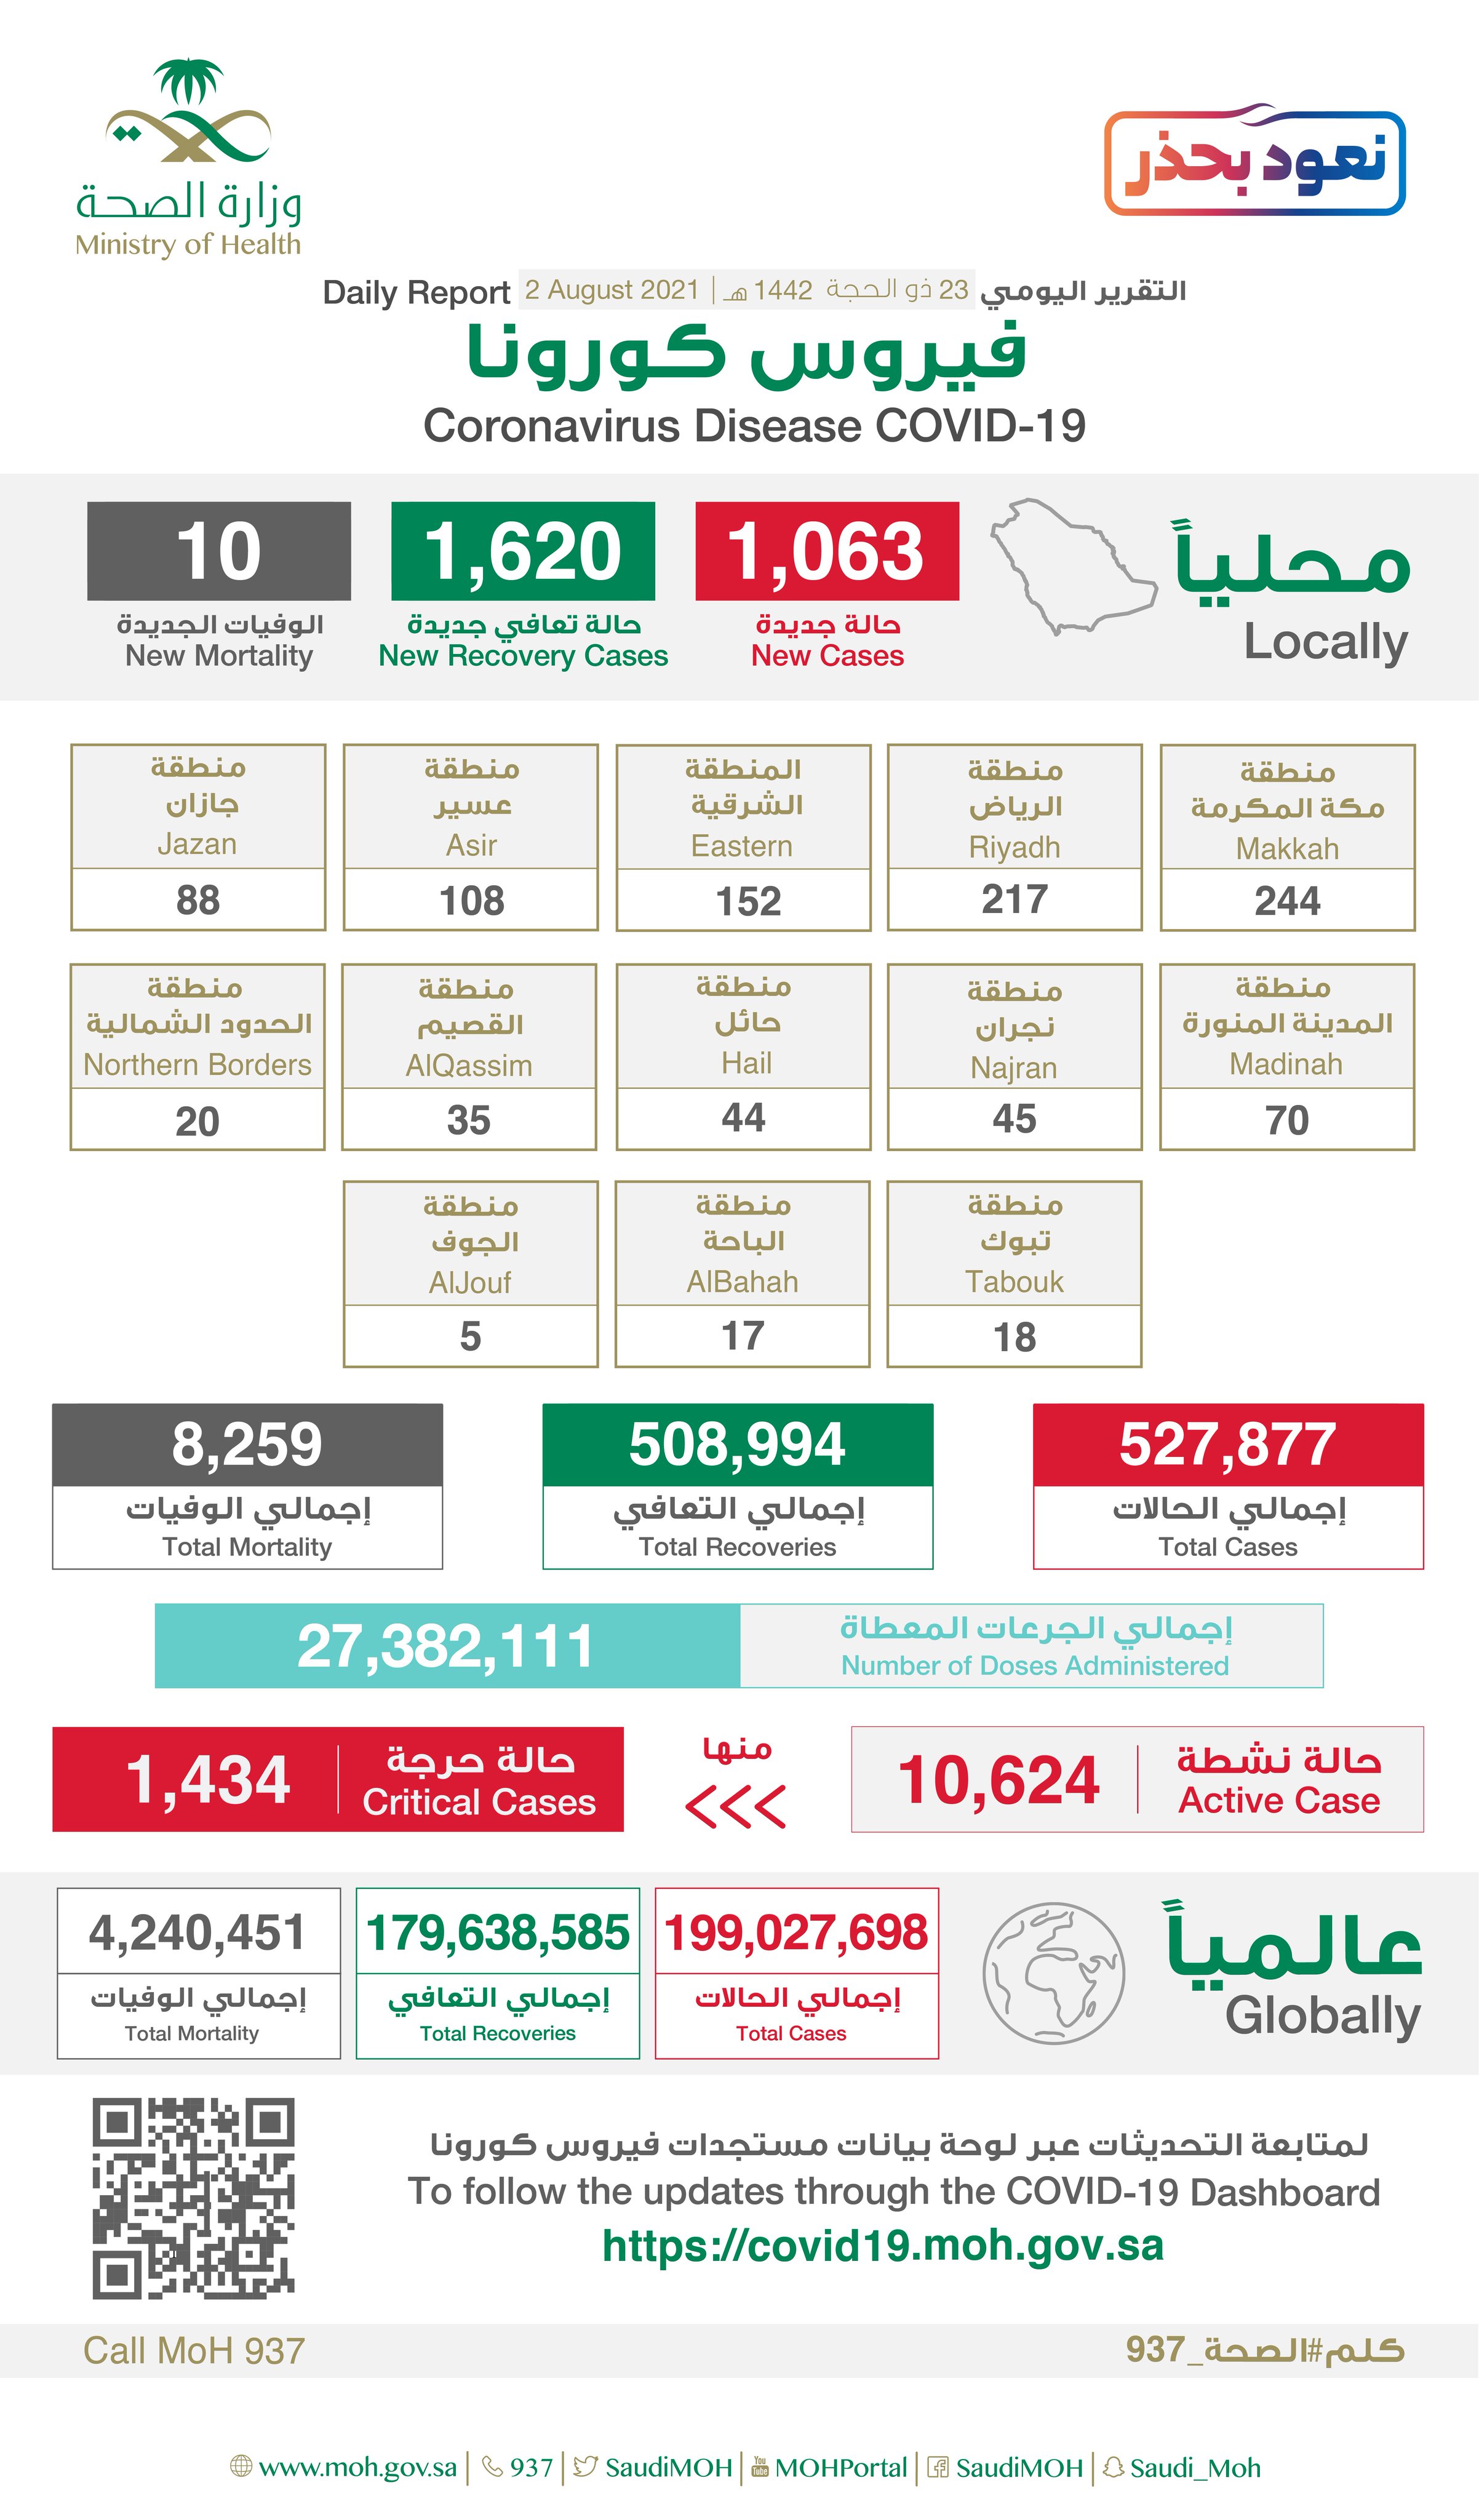 Saudi Arabia Coronavirus : Total Cases : 527,877 , New Cases :1,063, Cured : 508,994 , Deaths: 8,259 , Active Cases : 10,624